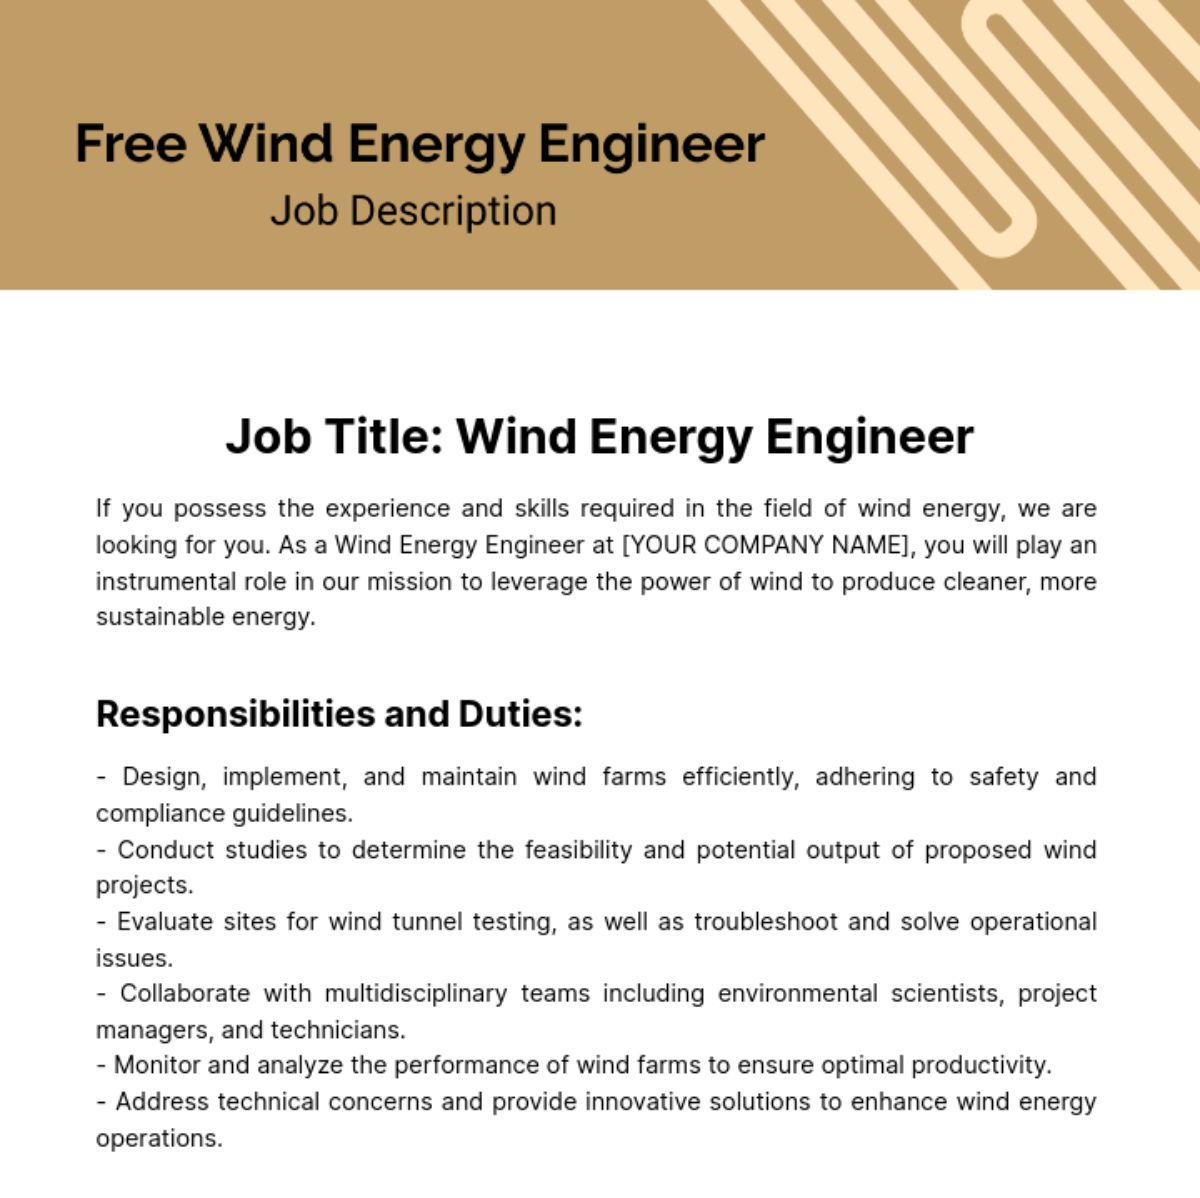 Free Wind Energy Engineer Job Description Template